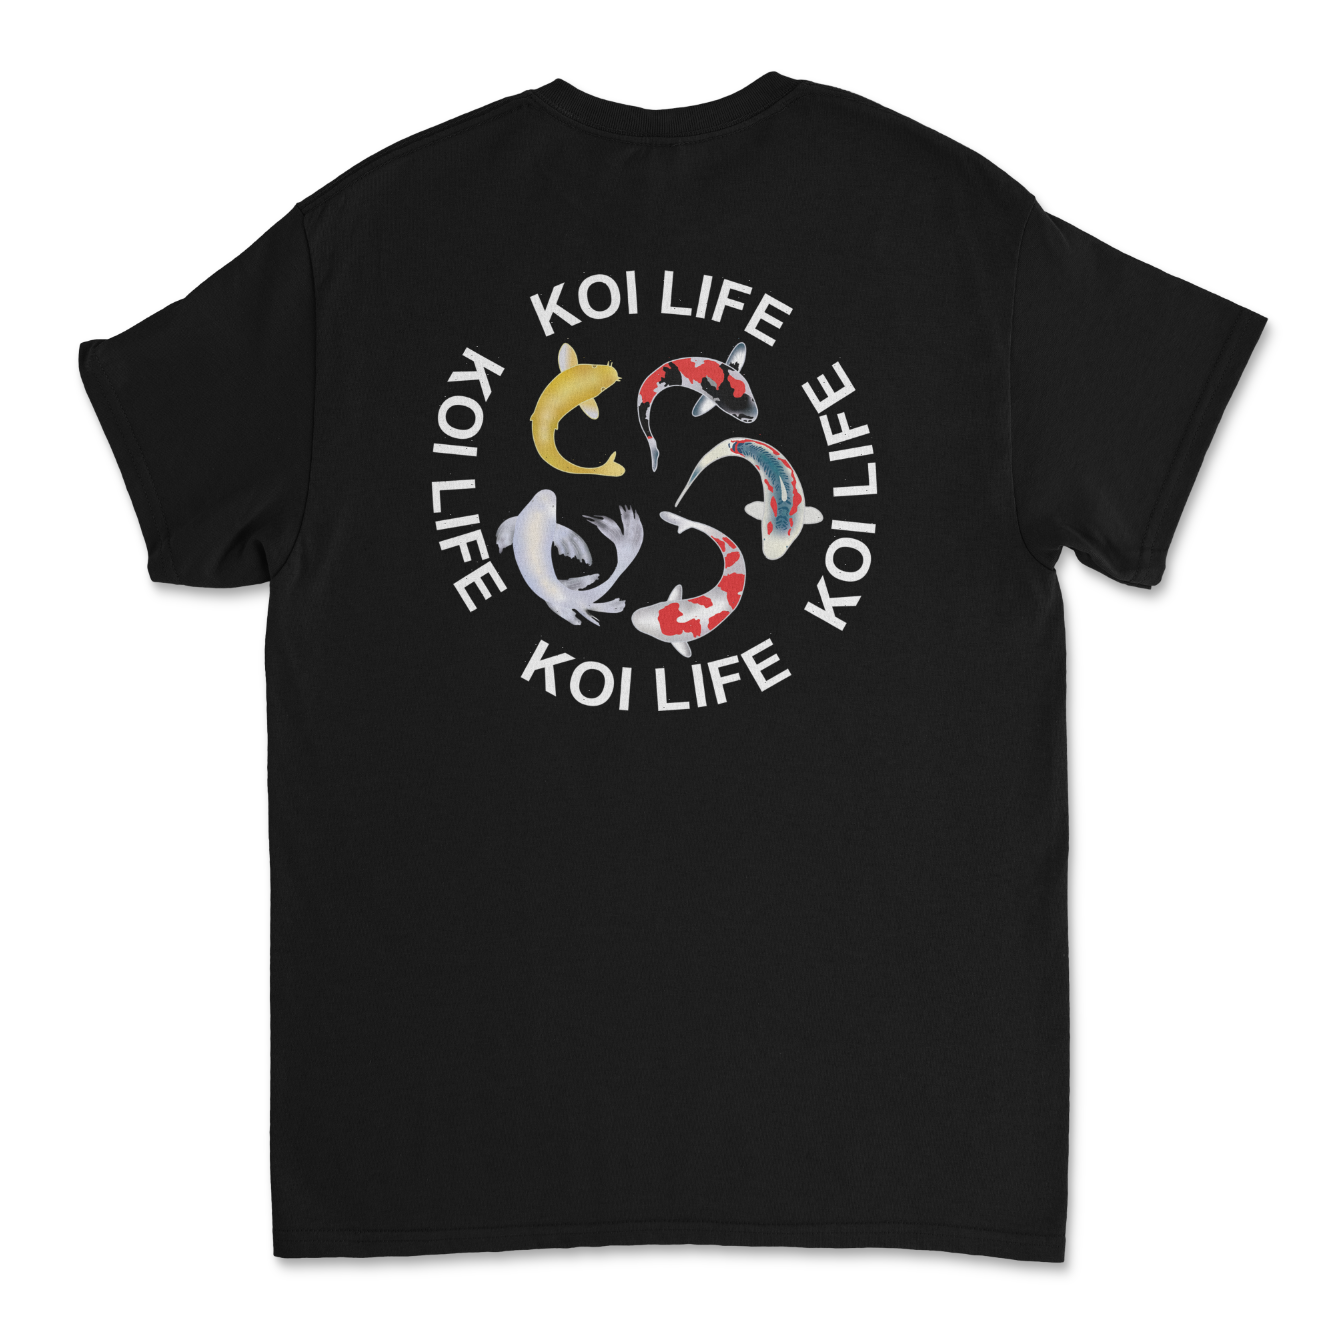 The Tank Life Apparel Koi Life Fish design on a black t-shirt. Koi going in a circle on back of shirt. Koi Life.